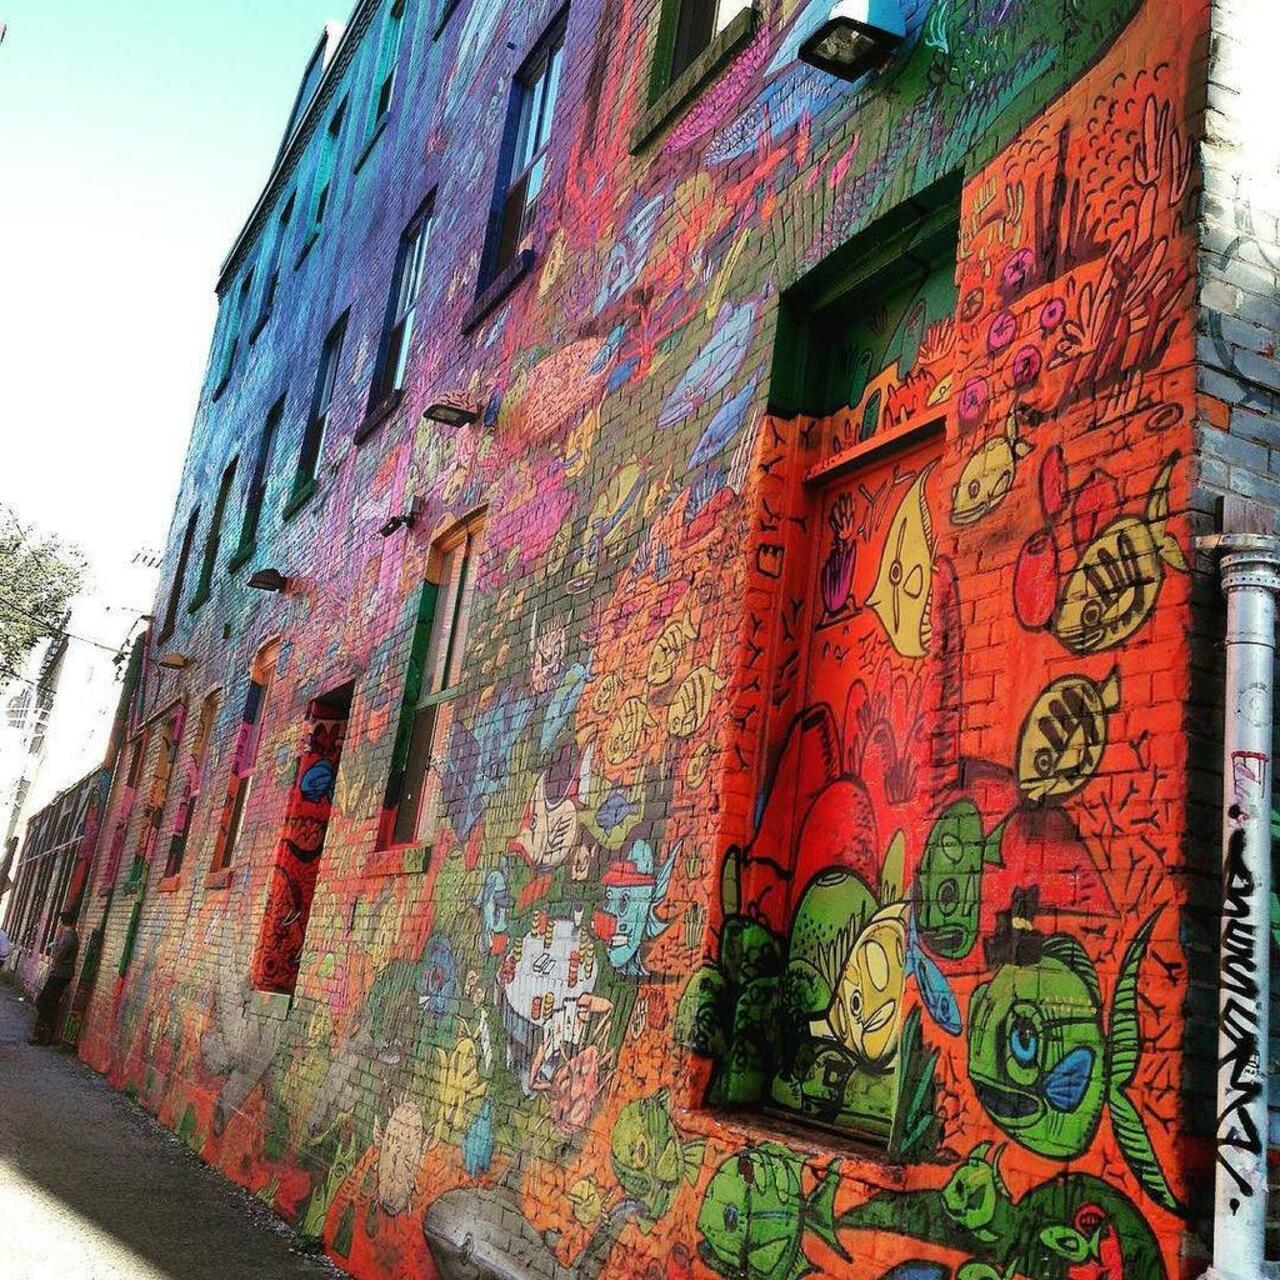 RT @artpushr: via #braveheart_ellabs "http://ift.tt/1JyqNqh" #graffiti #streetart http://t.co/Emf6YXRSbV